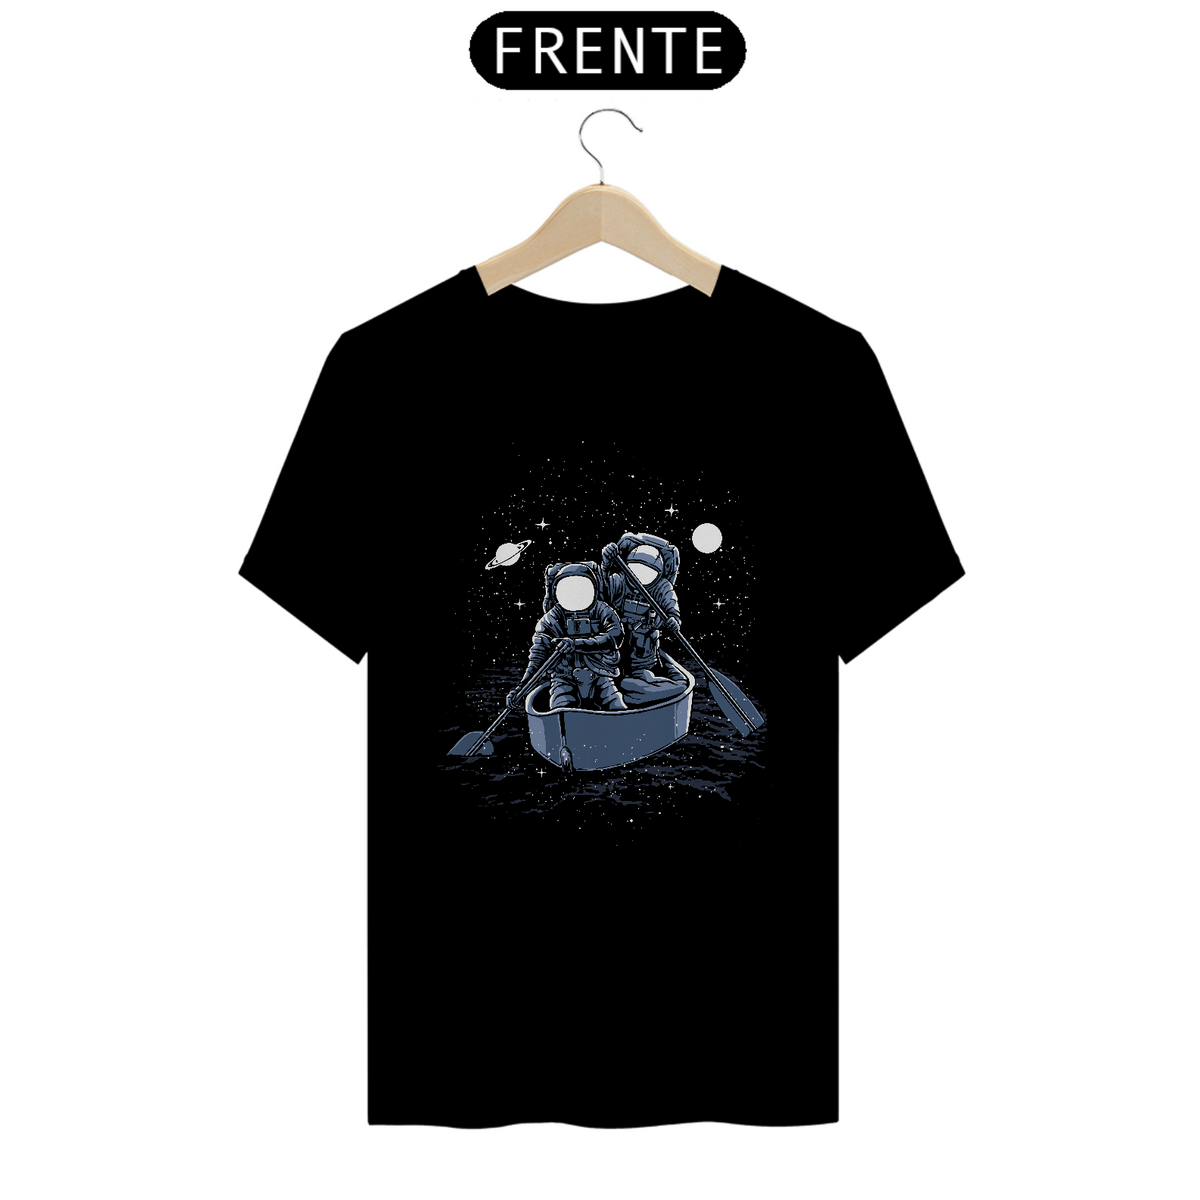 Nome do produto: Camiseta Do outro lado da galáxia